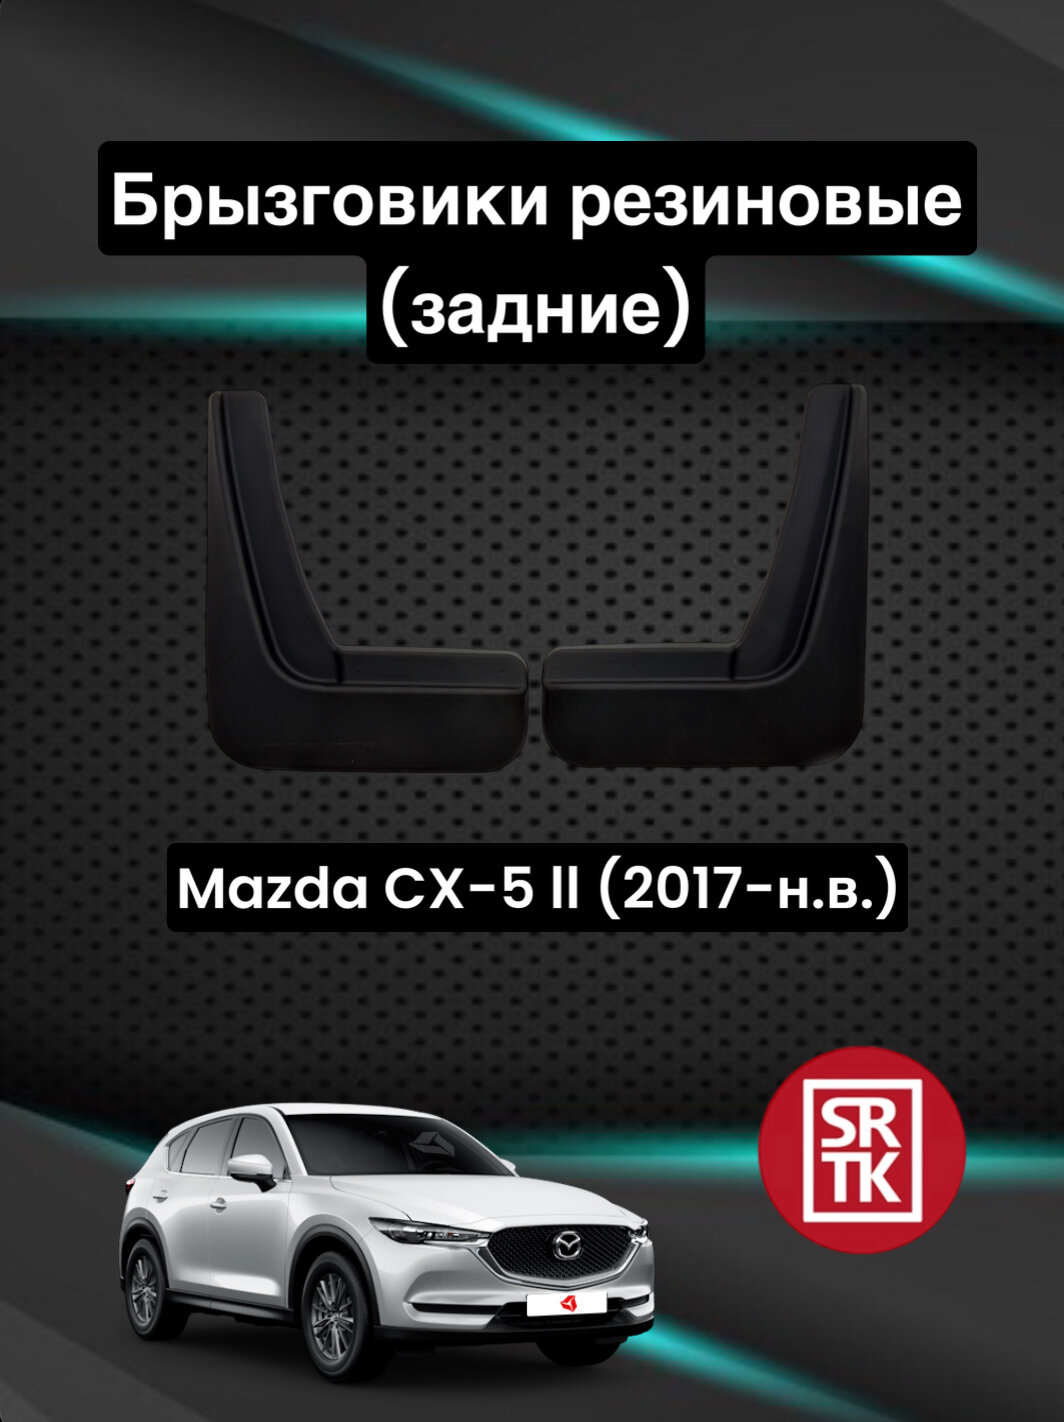 Брызговики резиновые для Мазда СХ-5/Mazda CX-5 II (2017-) SRTK, задние